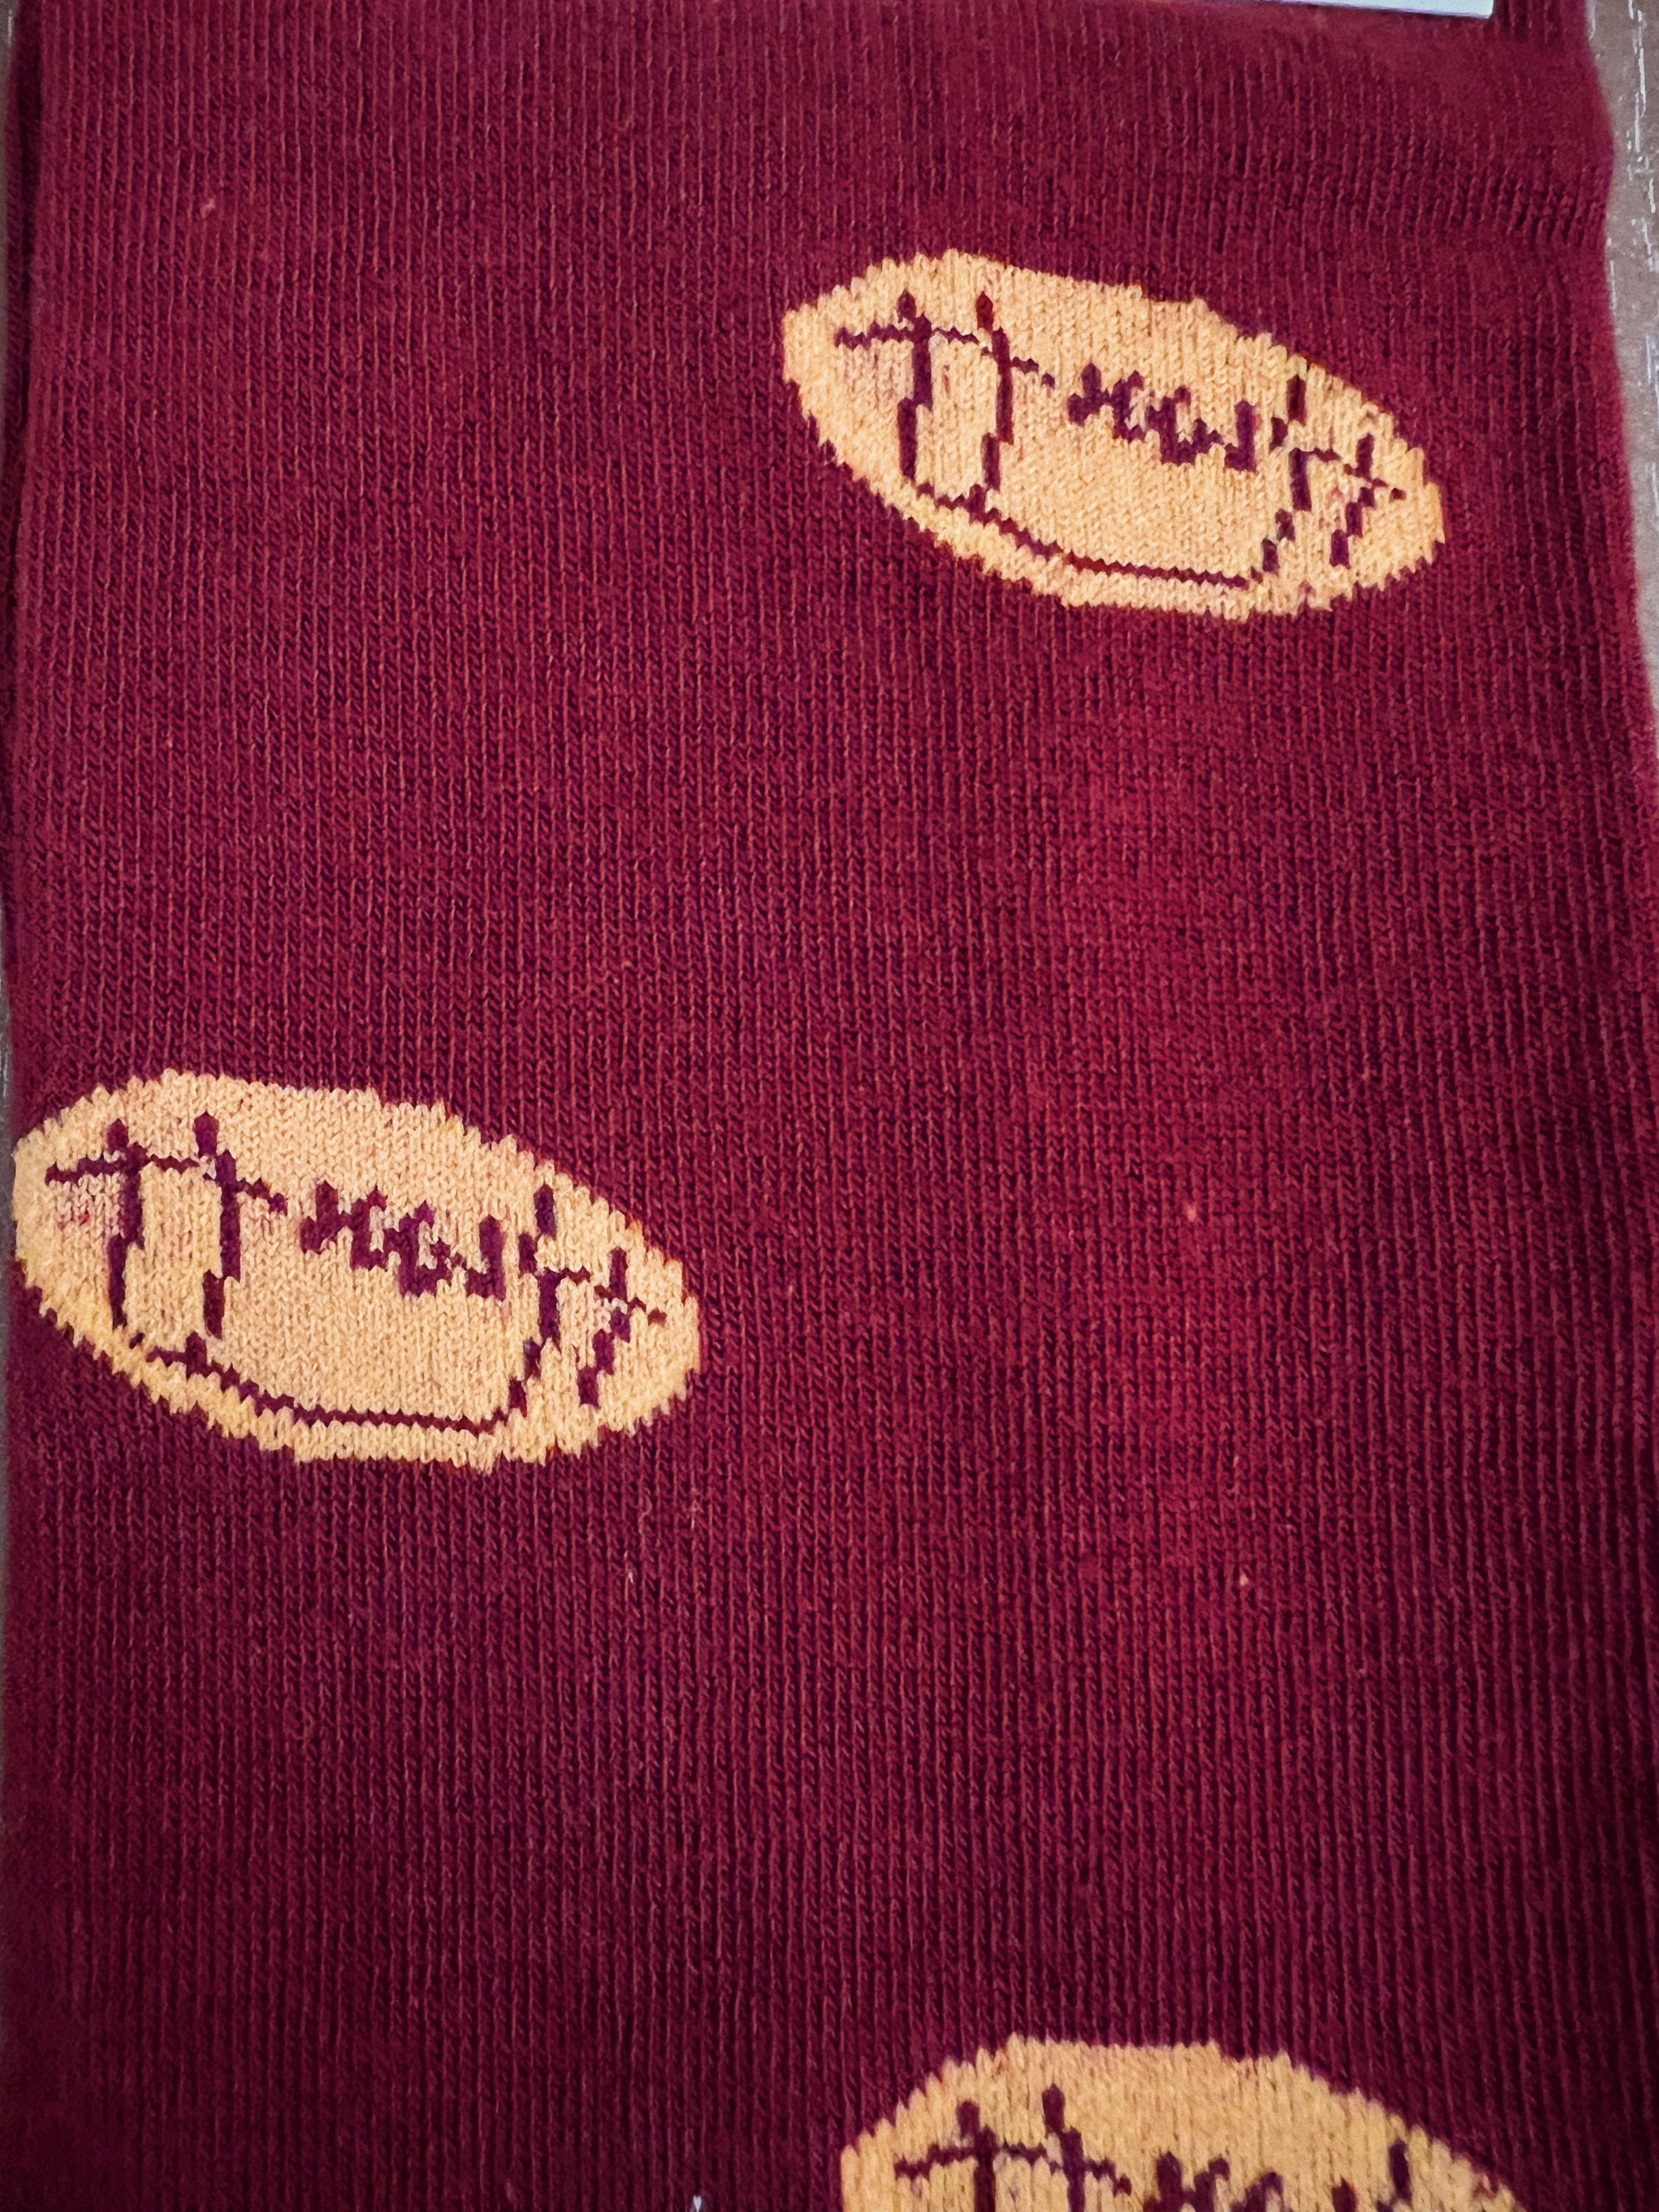 Rugby socks